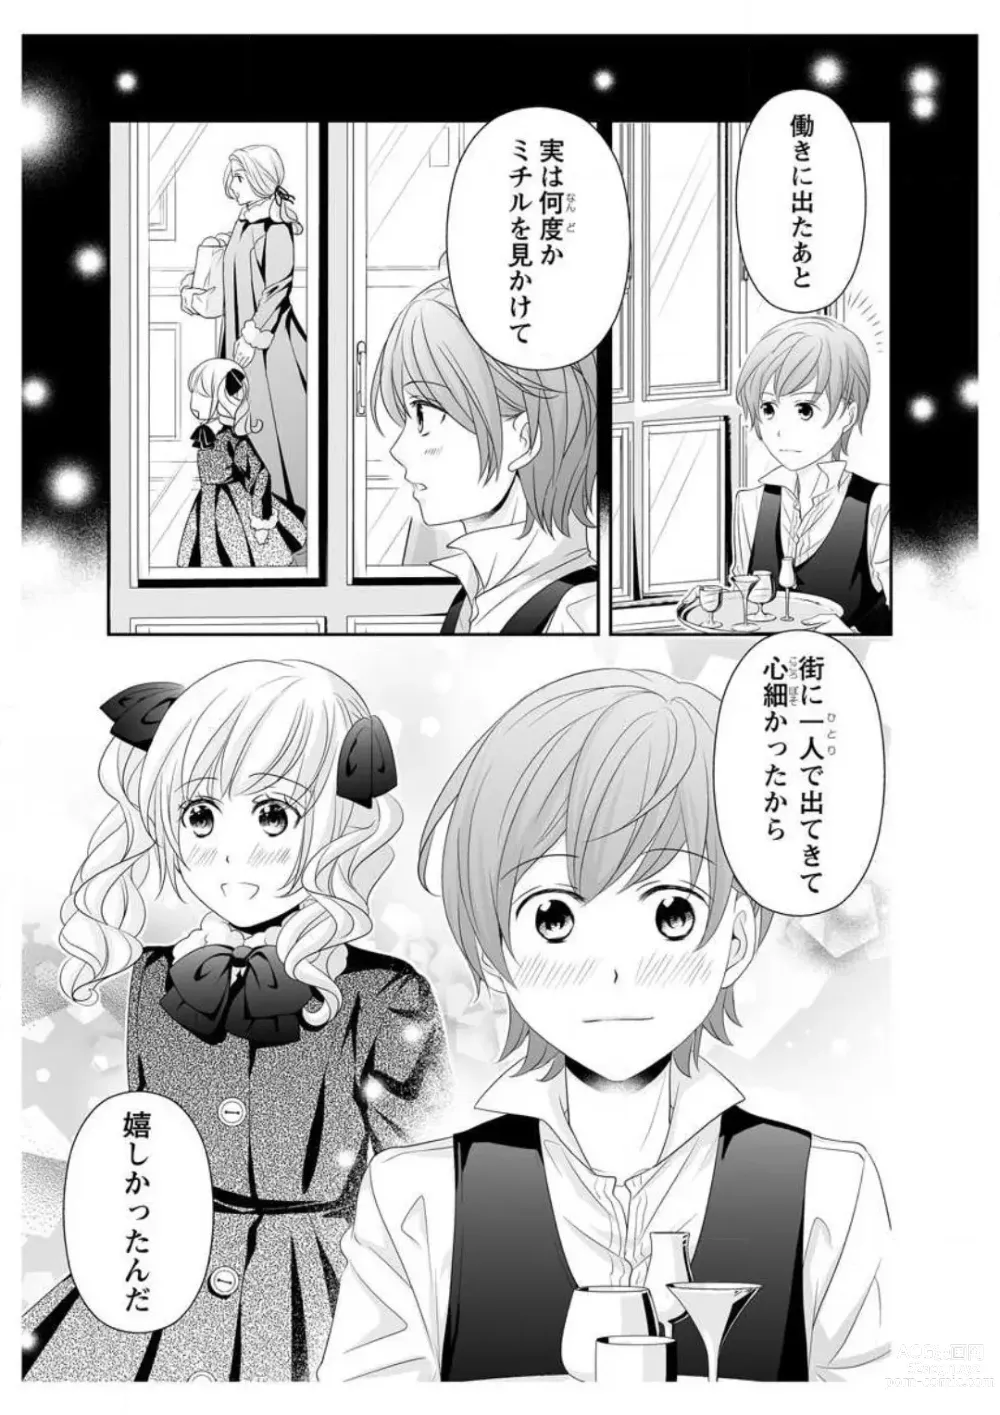 Page 228 of manga Ero ◆ Meruhen Aoi Tori 1-10